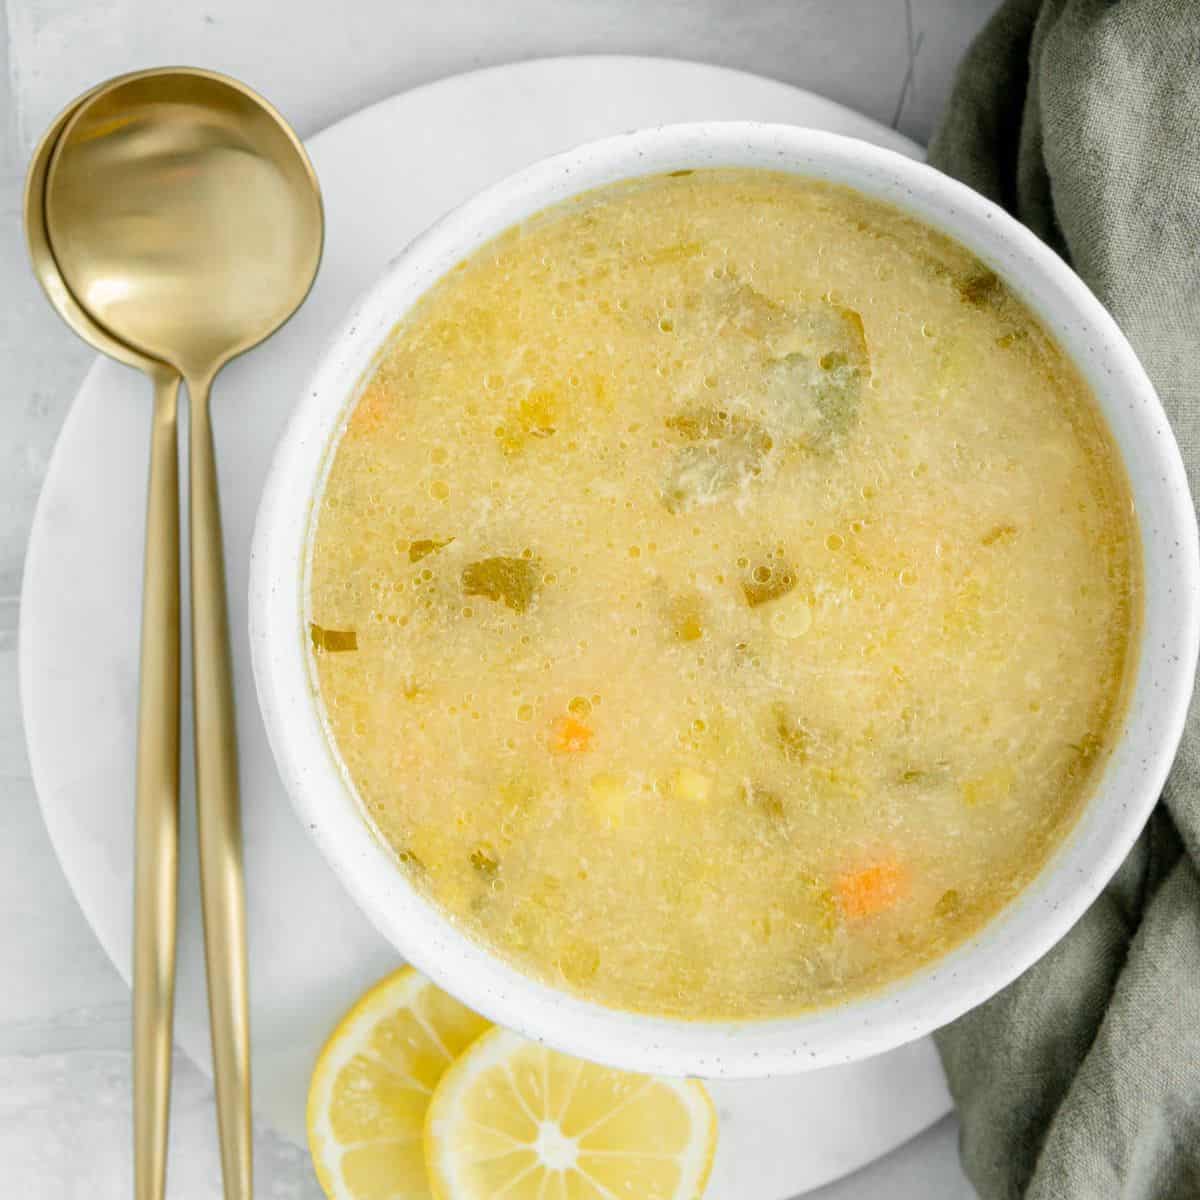 Cozy Pumpkin Curry Soup Recipe - Jar Of Lemons